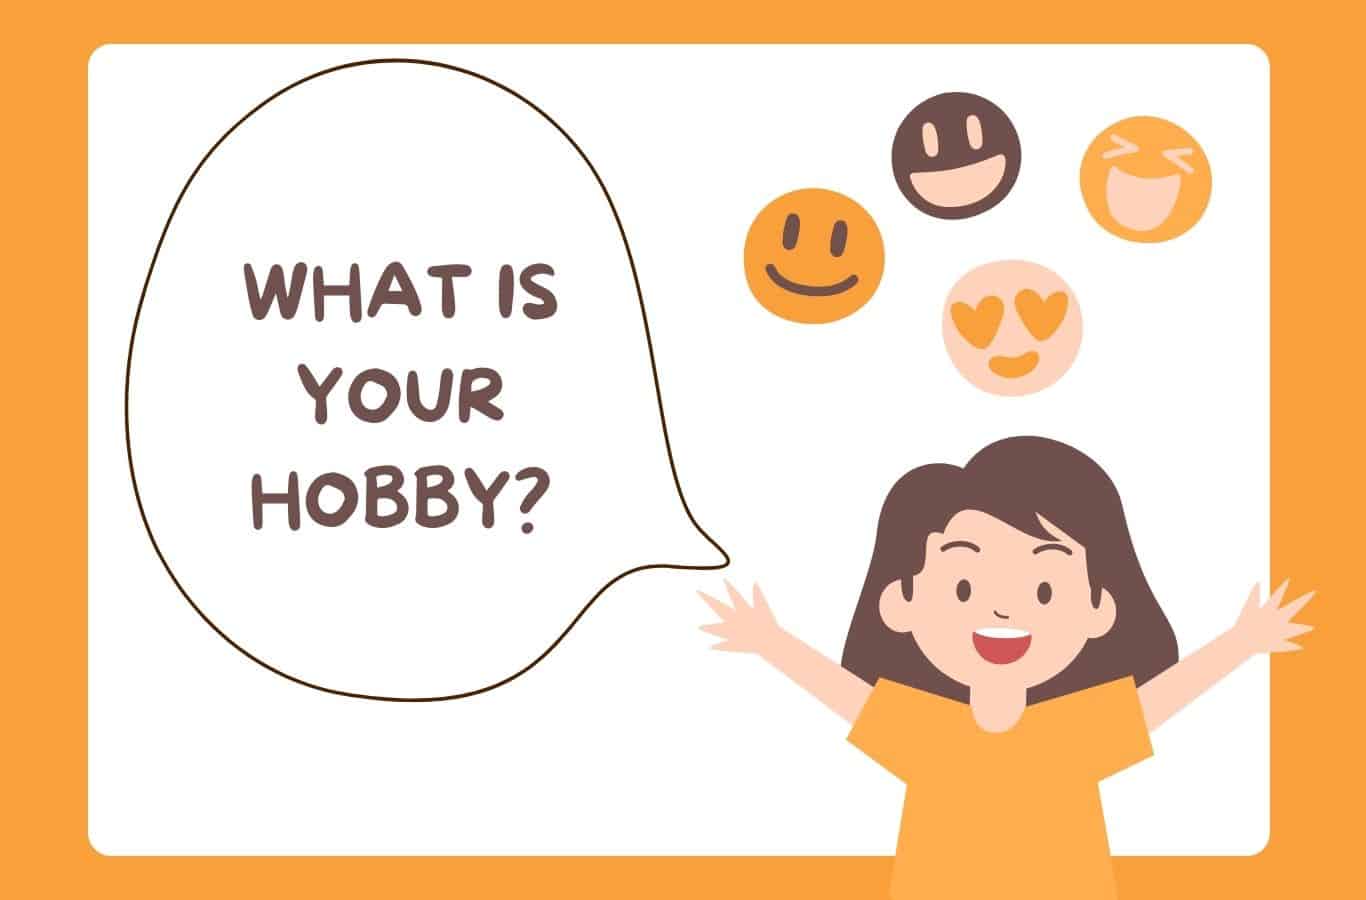 Ngữ pháp hỏi sở thích: What is your hobby?